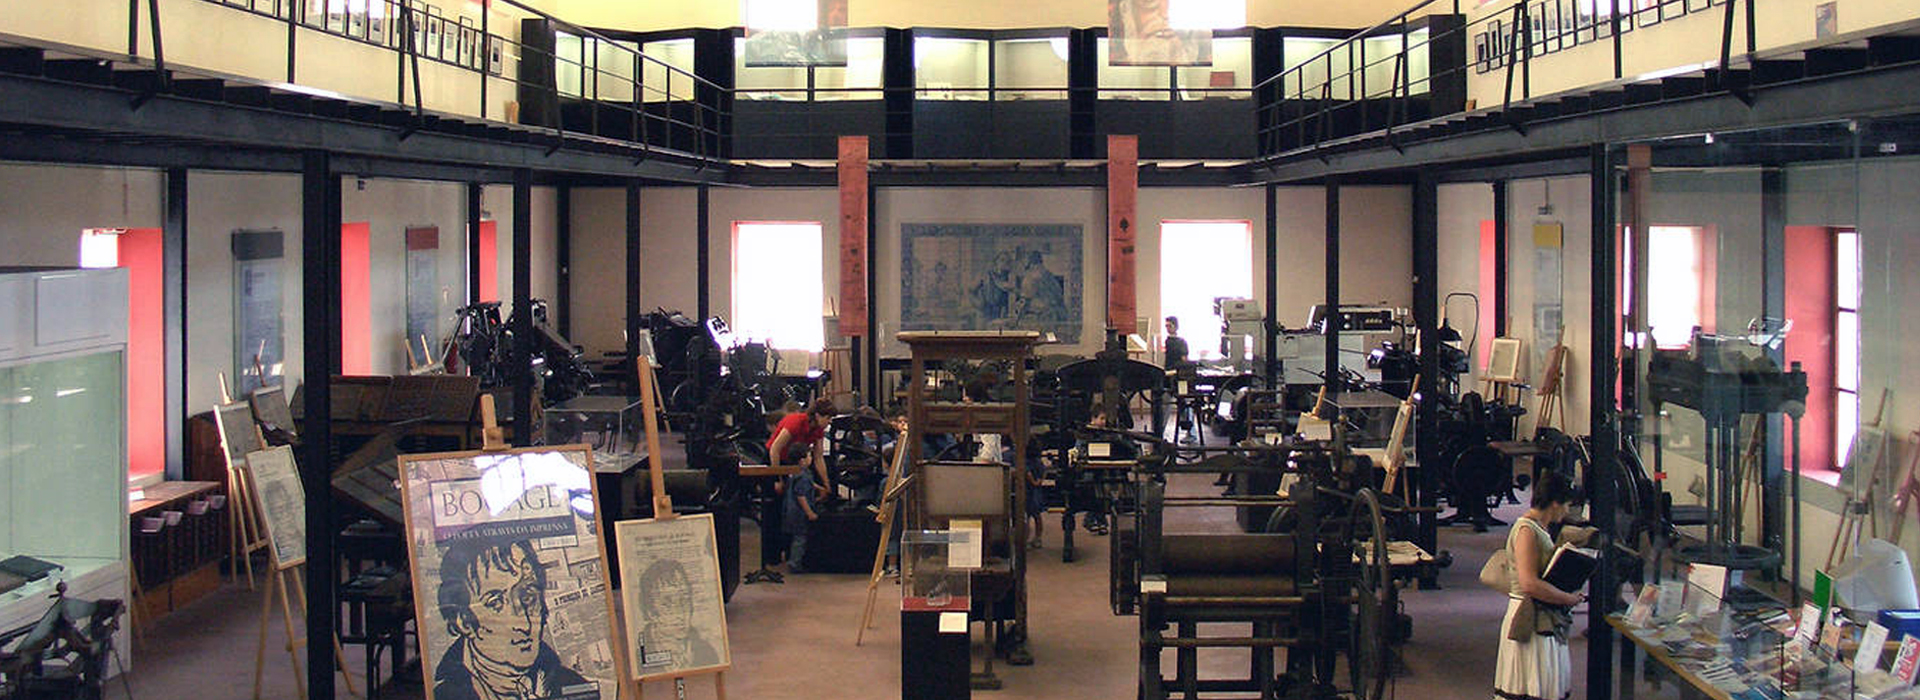 National Printing Museum